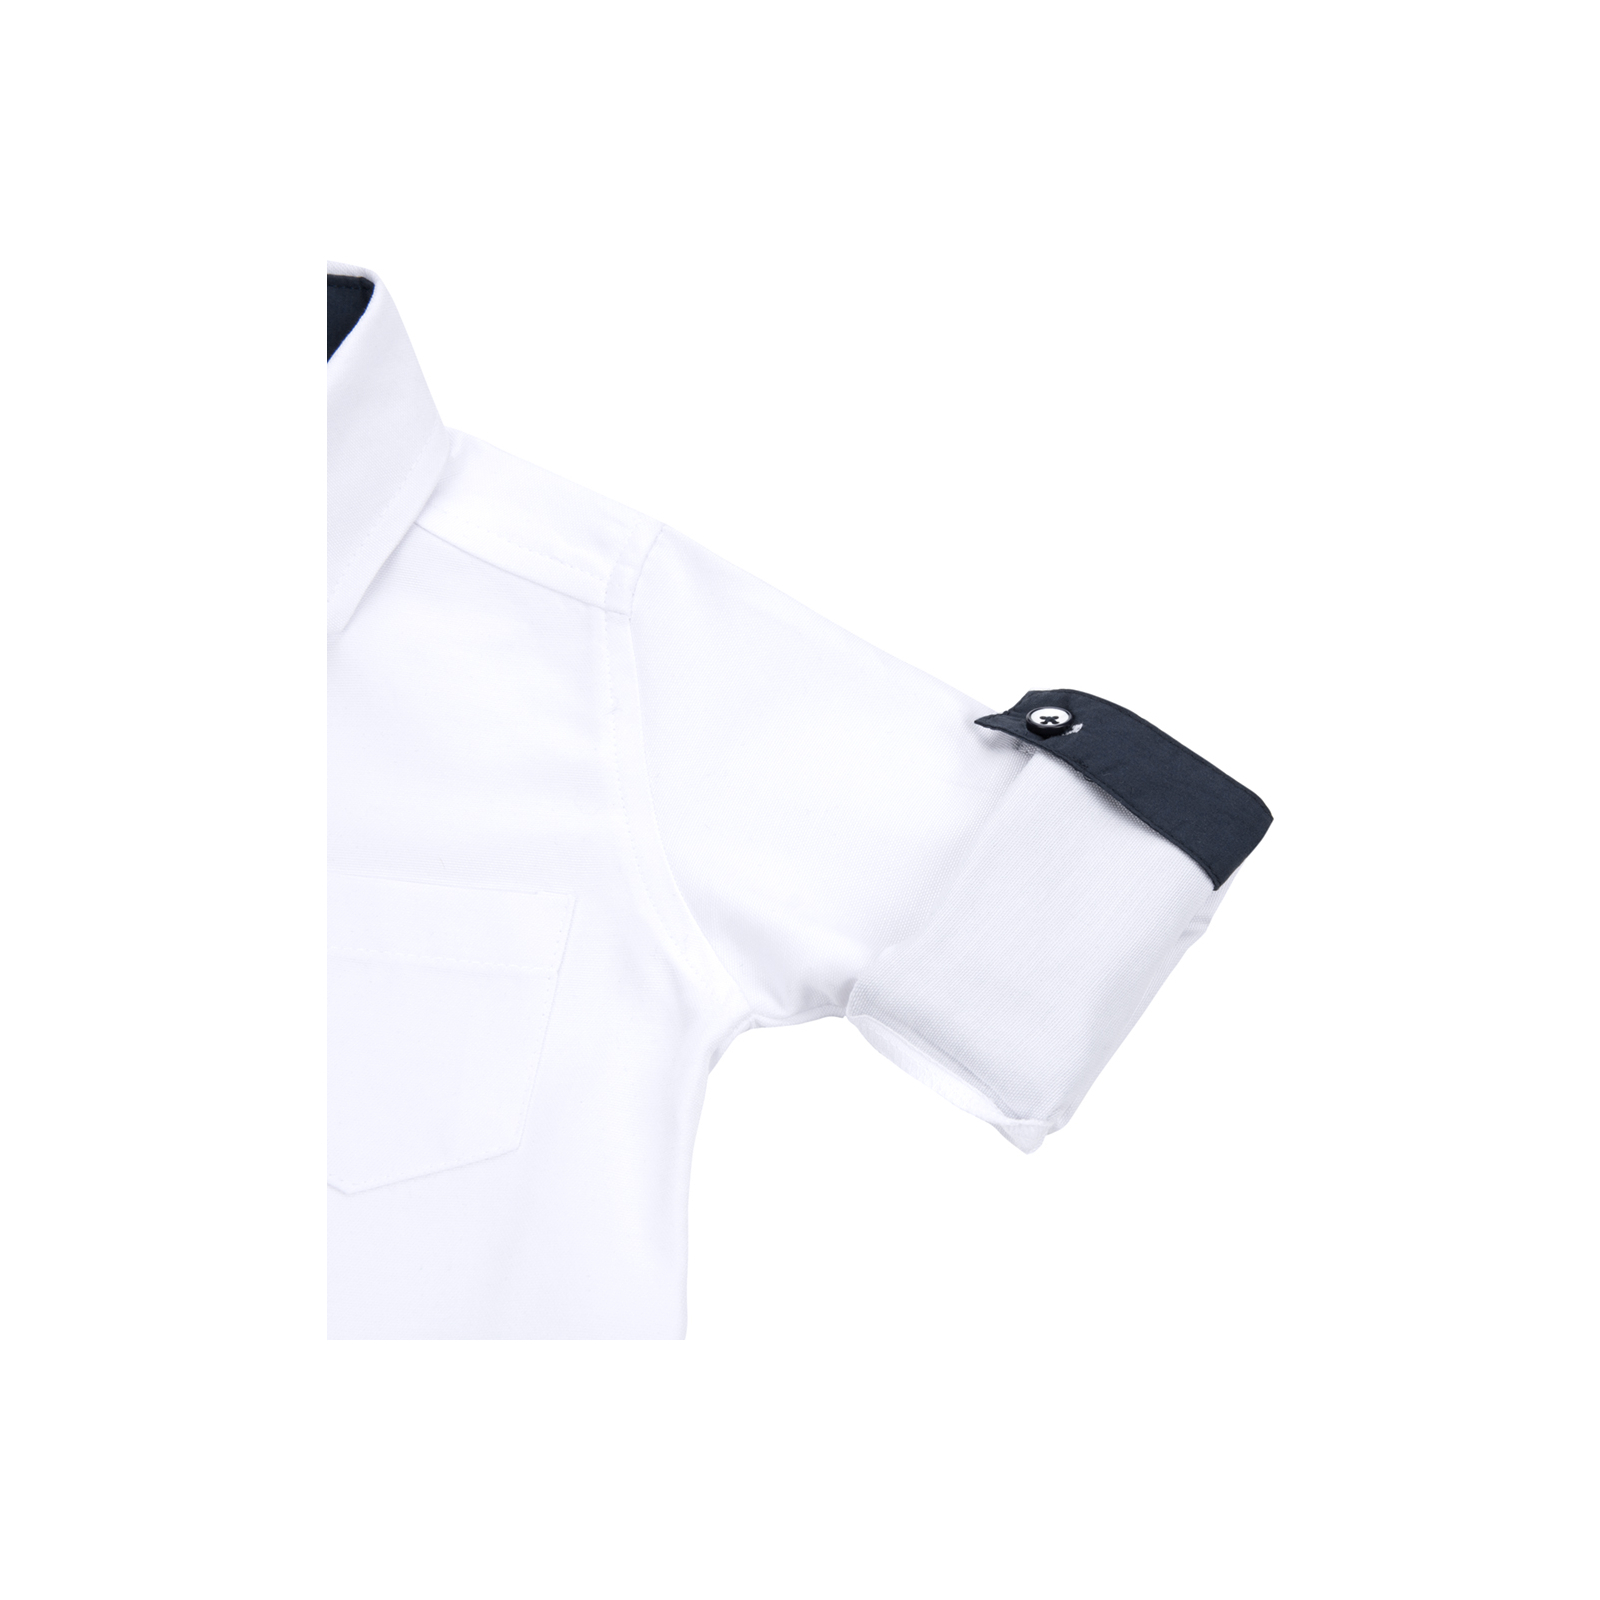 Рубашка Breeze белая (G-218-74B-white) изображение 3